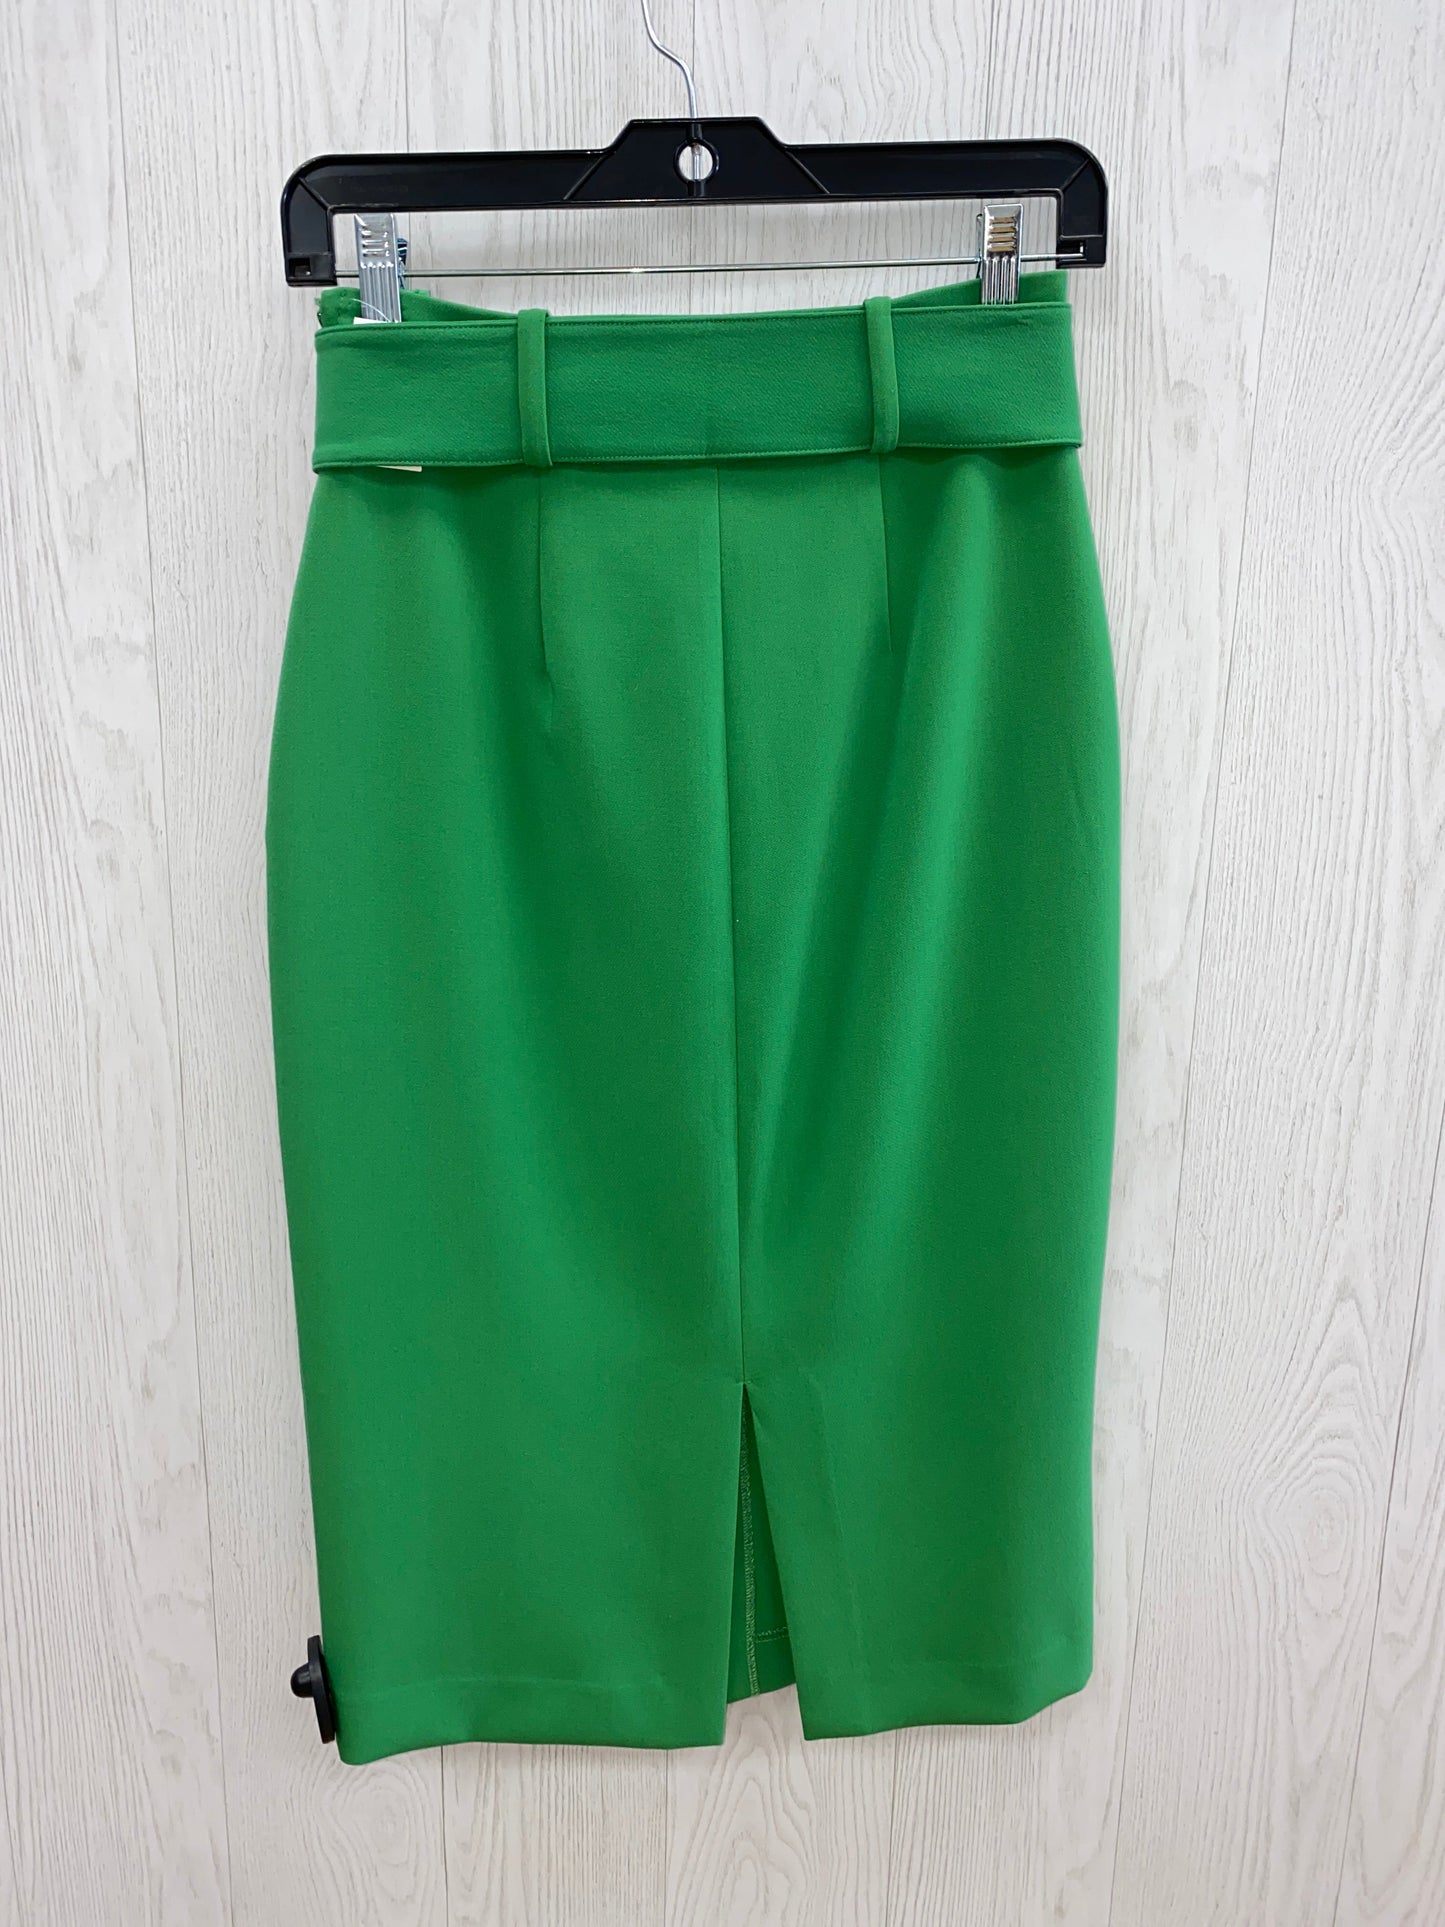 Green Skirt Midi Nine West, Size 2petite